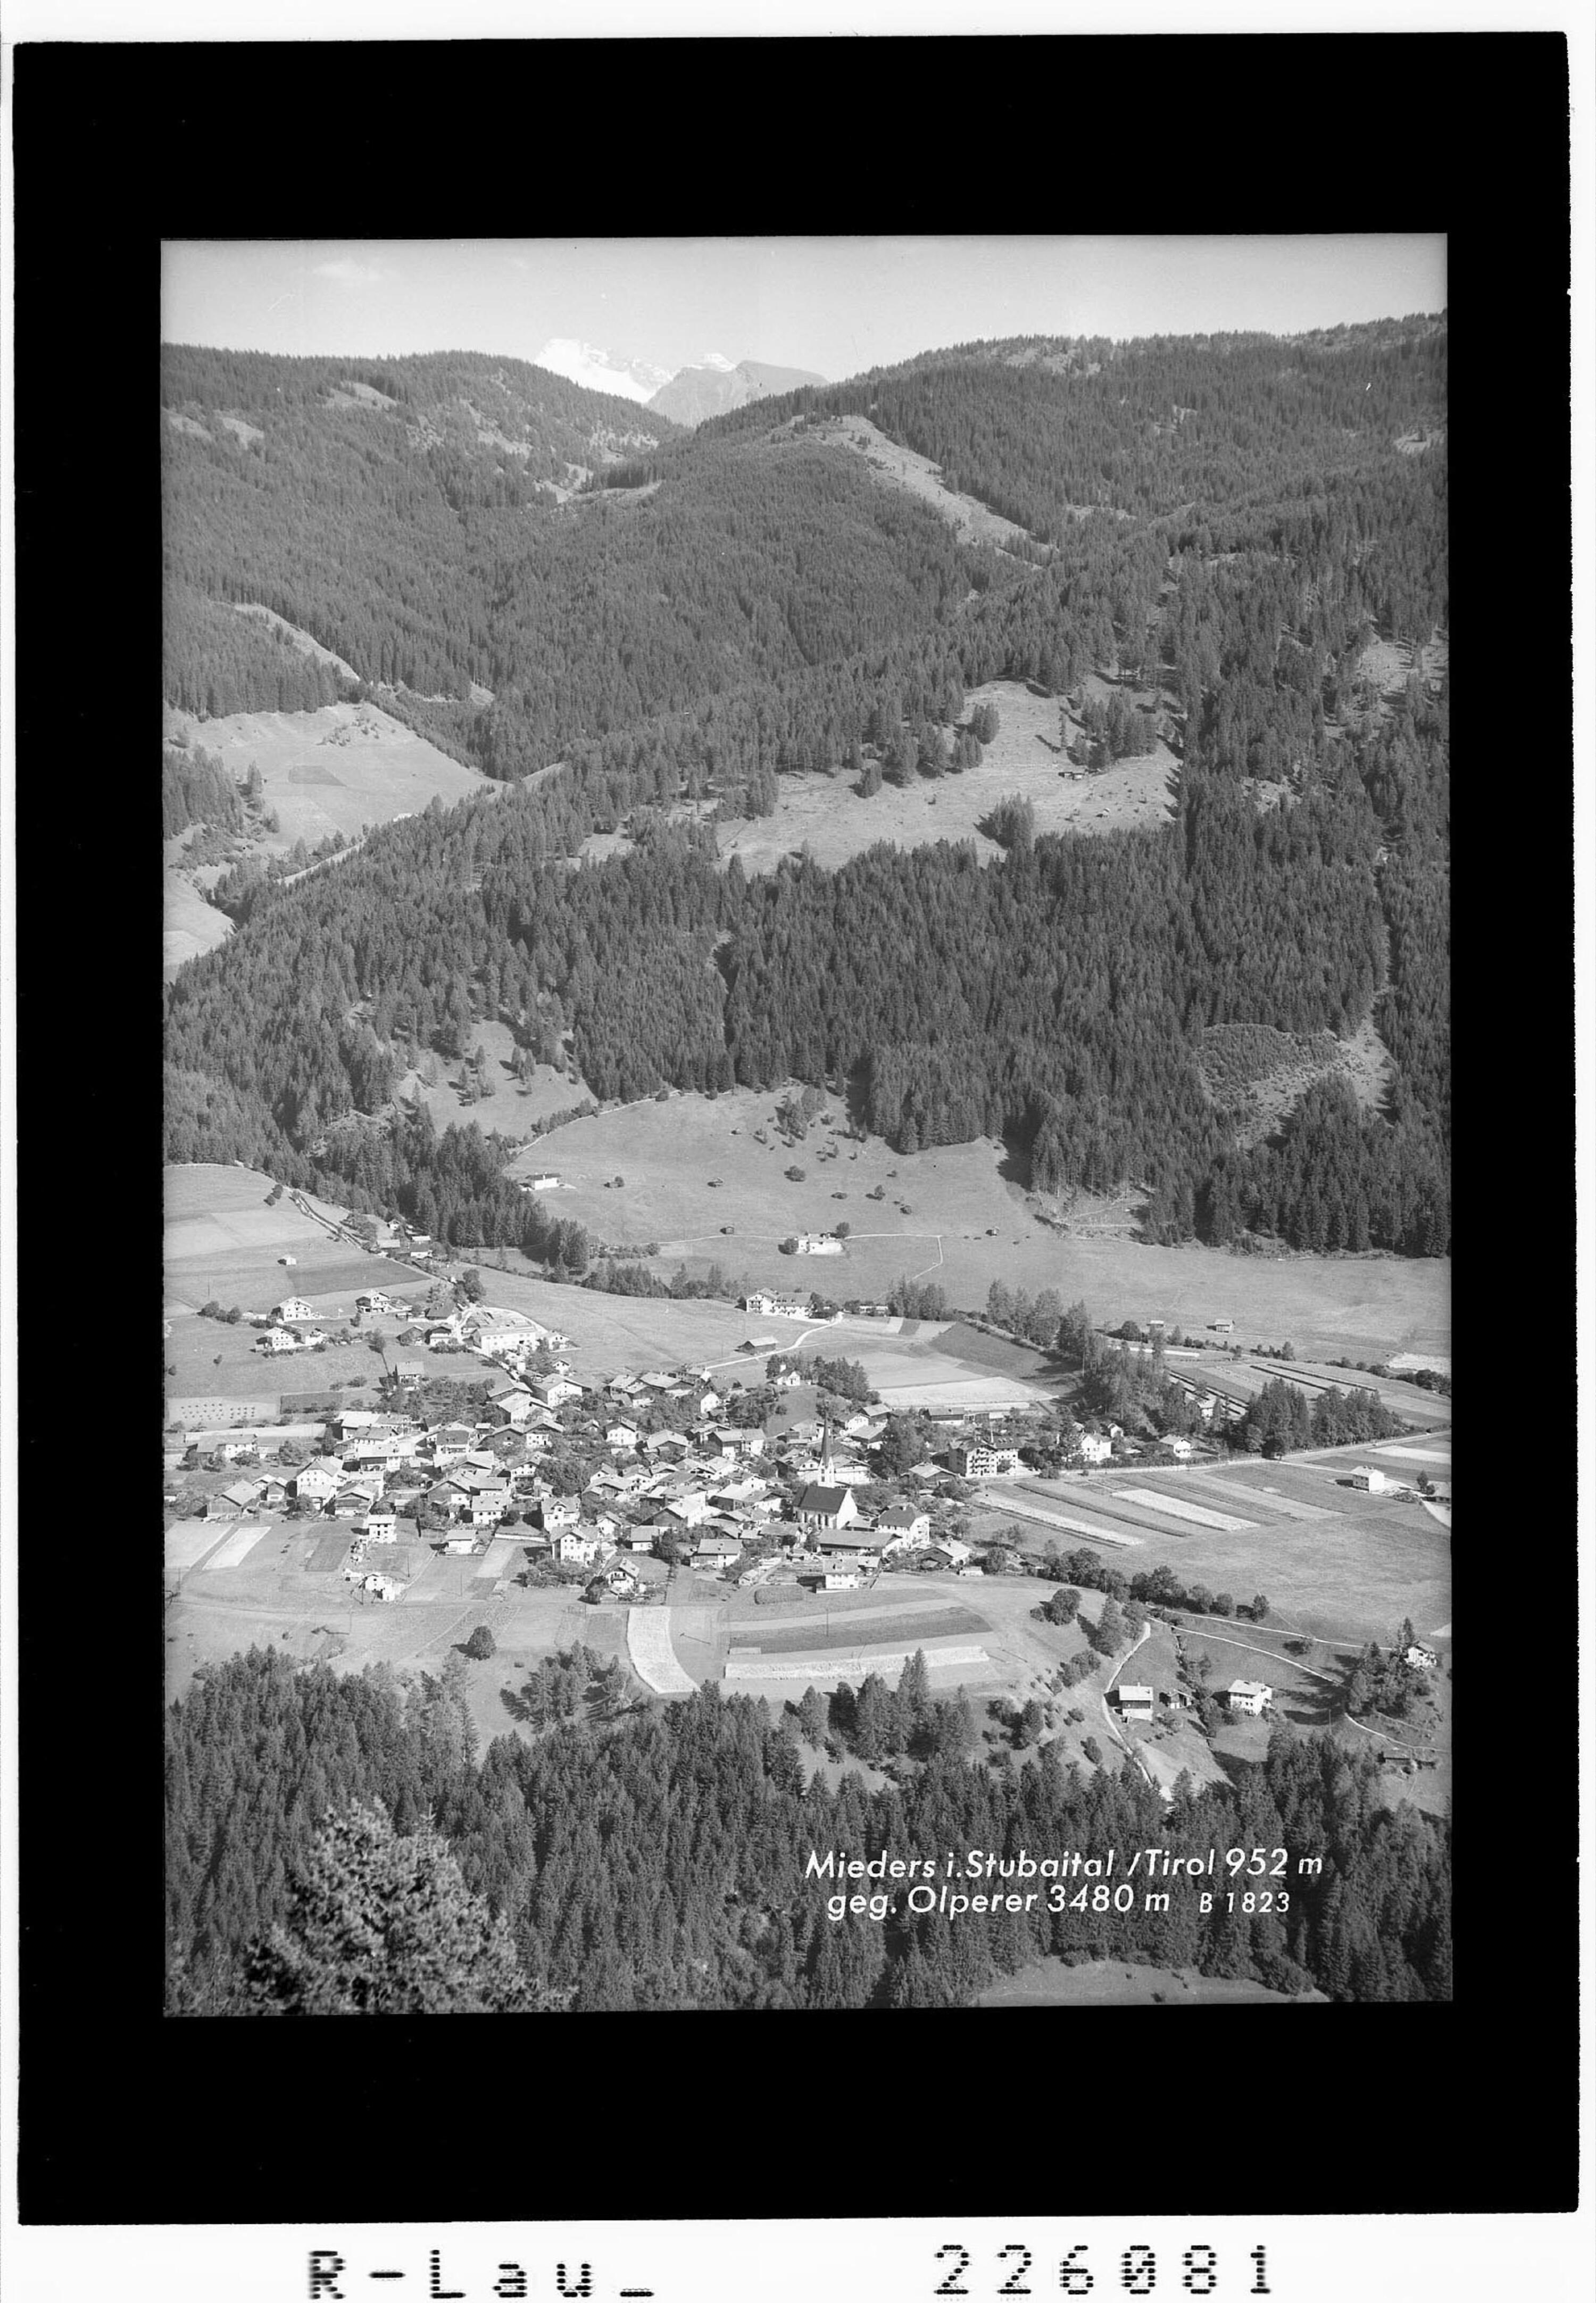 Mieders im Stubaital / Tirol 952 m gegen Olperer 3480 m></div>


    <hr>
    <div class=